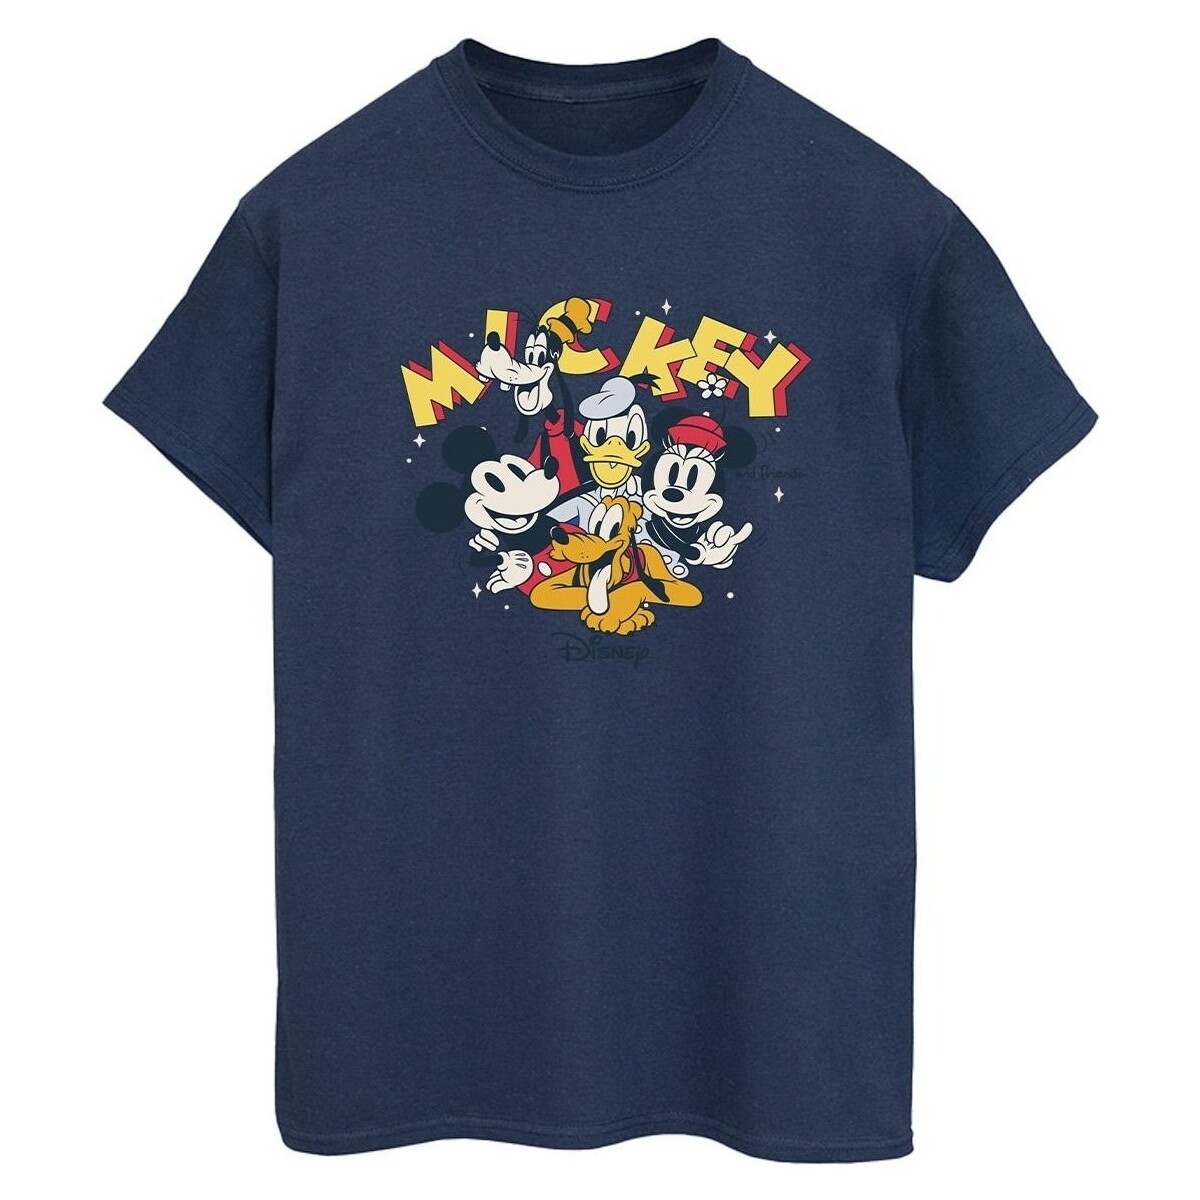 textil Mujer Camisetas manga larga Disney Mickey Mouse Group Azul